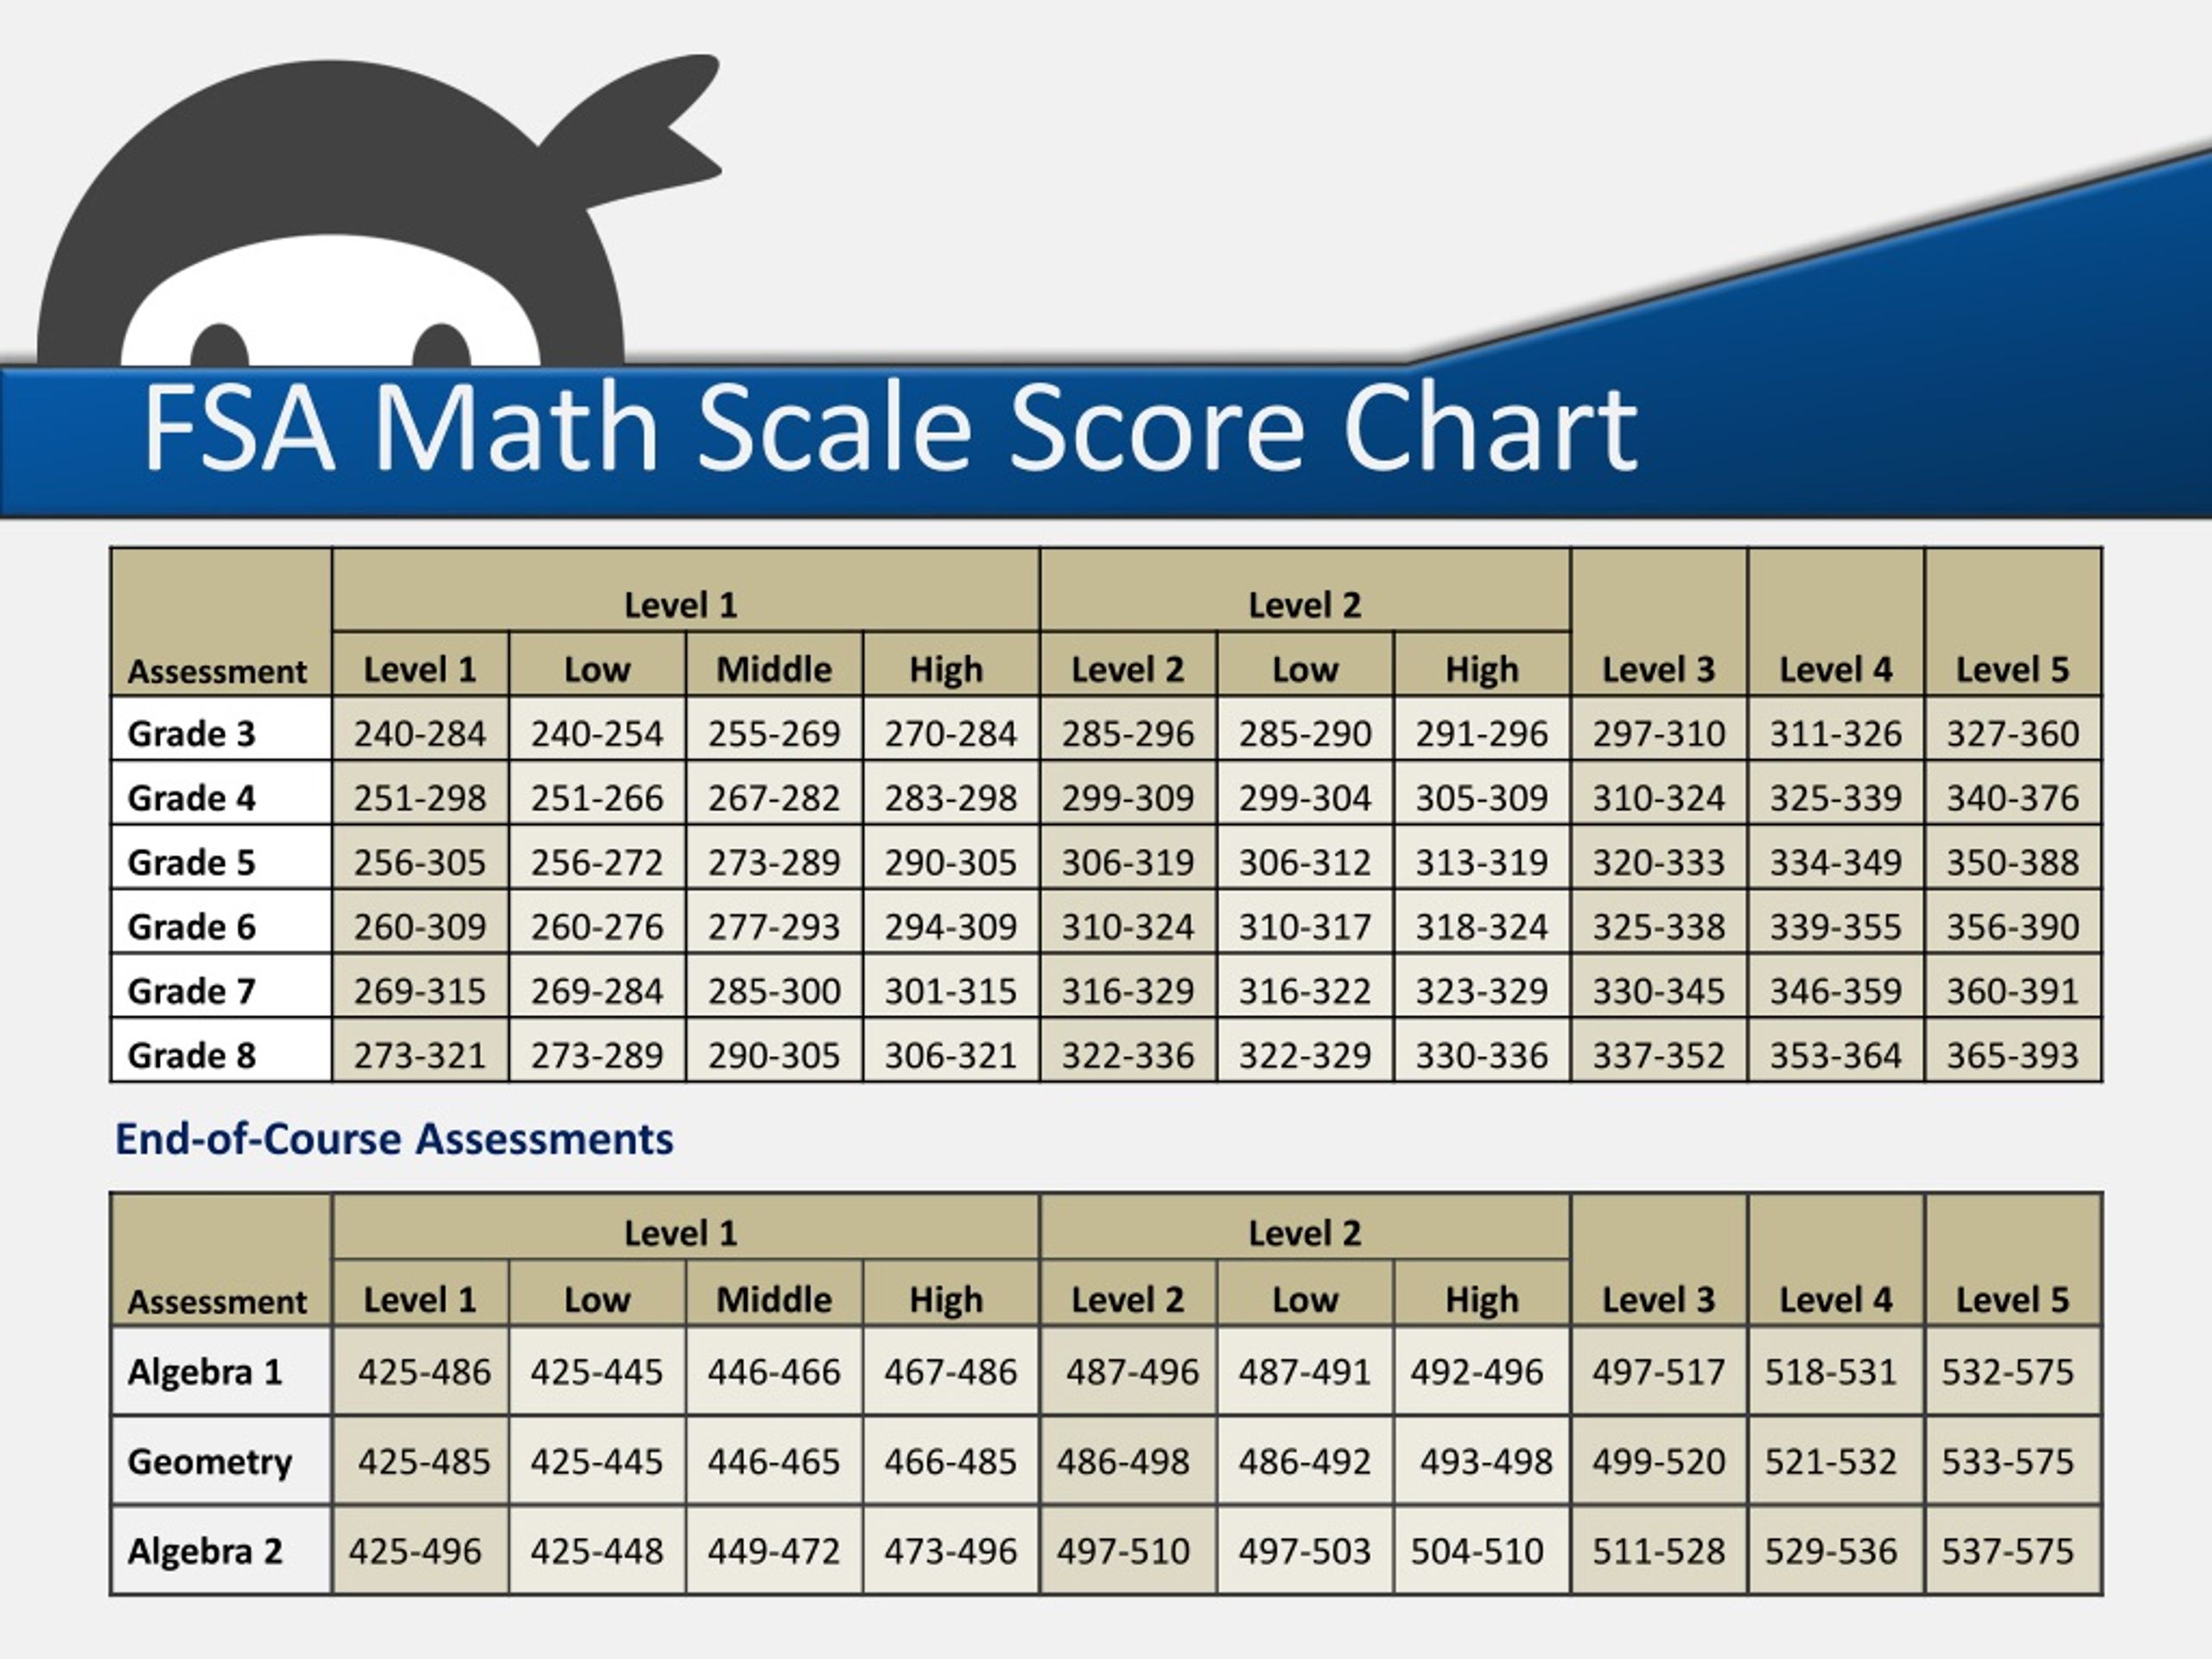 https://image4.slideserve.com/457532/fsa-math-scale-score-chart-l.jpg